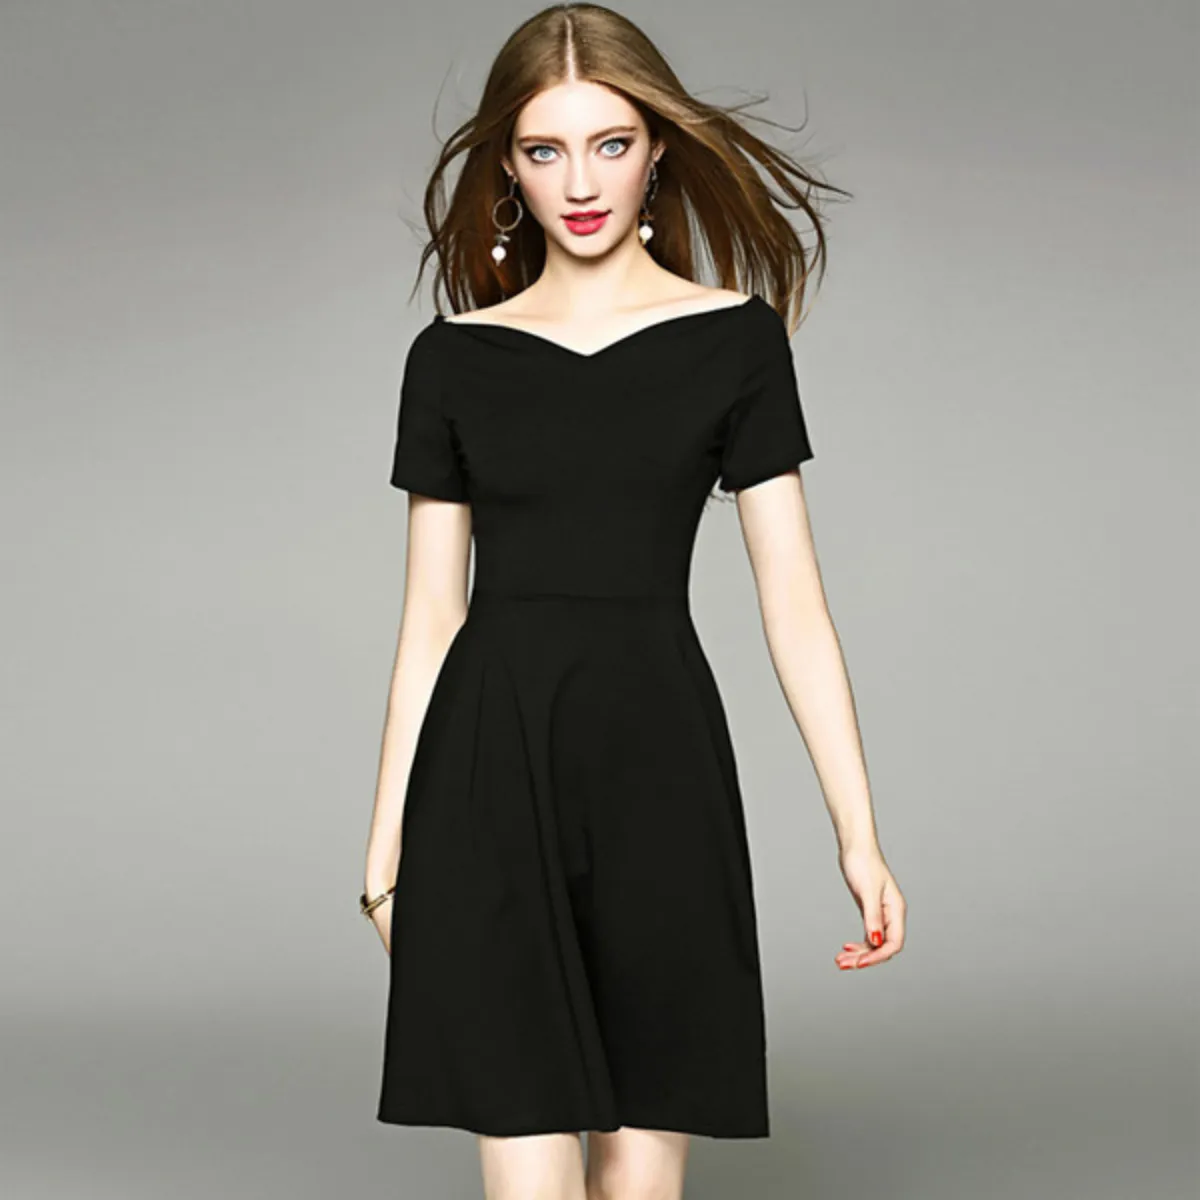 garde robe minimaliste femme 50 ans